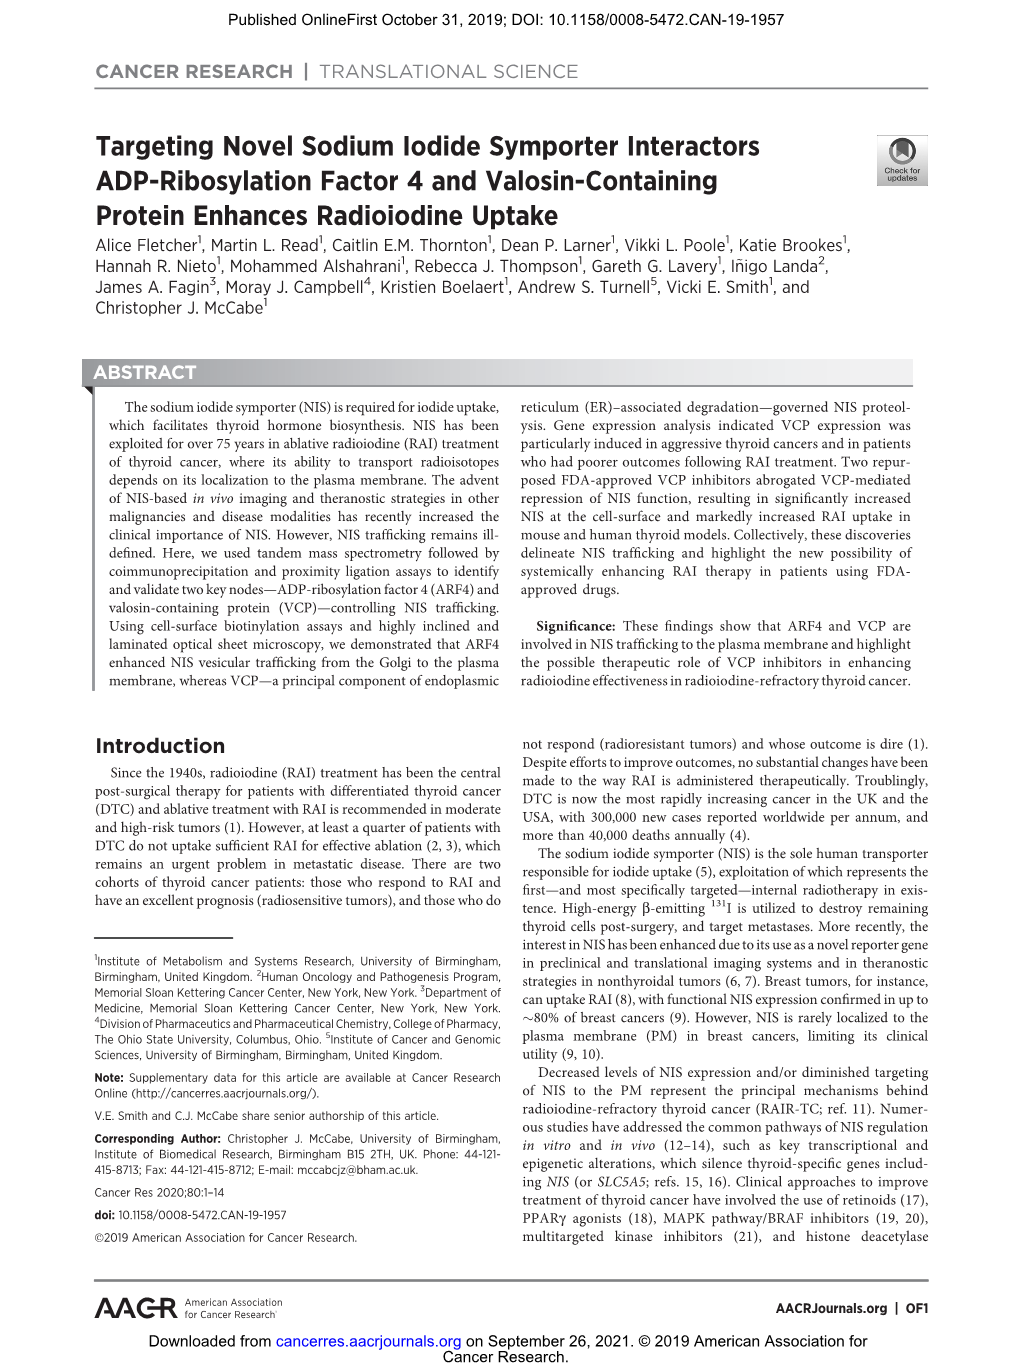 Targeting Novel Sodium Iodide Symporter Interactors ADP-Ribosylation Factor 4 and Valosin-Containing Protein Enhances Radioiodine Uptake Alice Fletcher1, Martin L